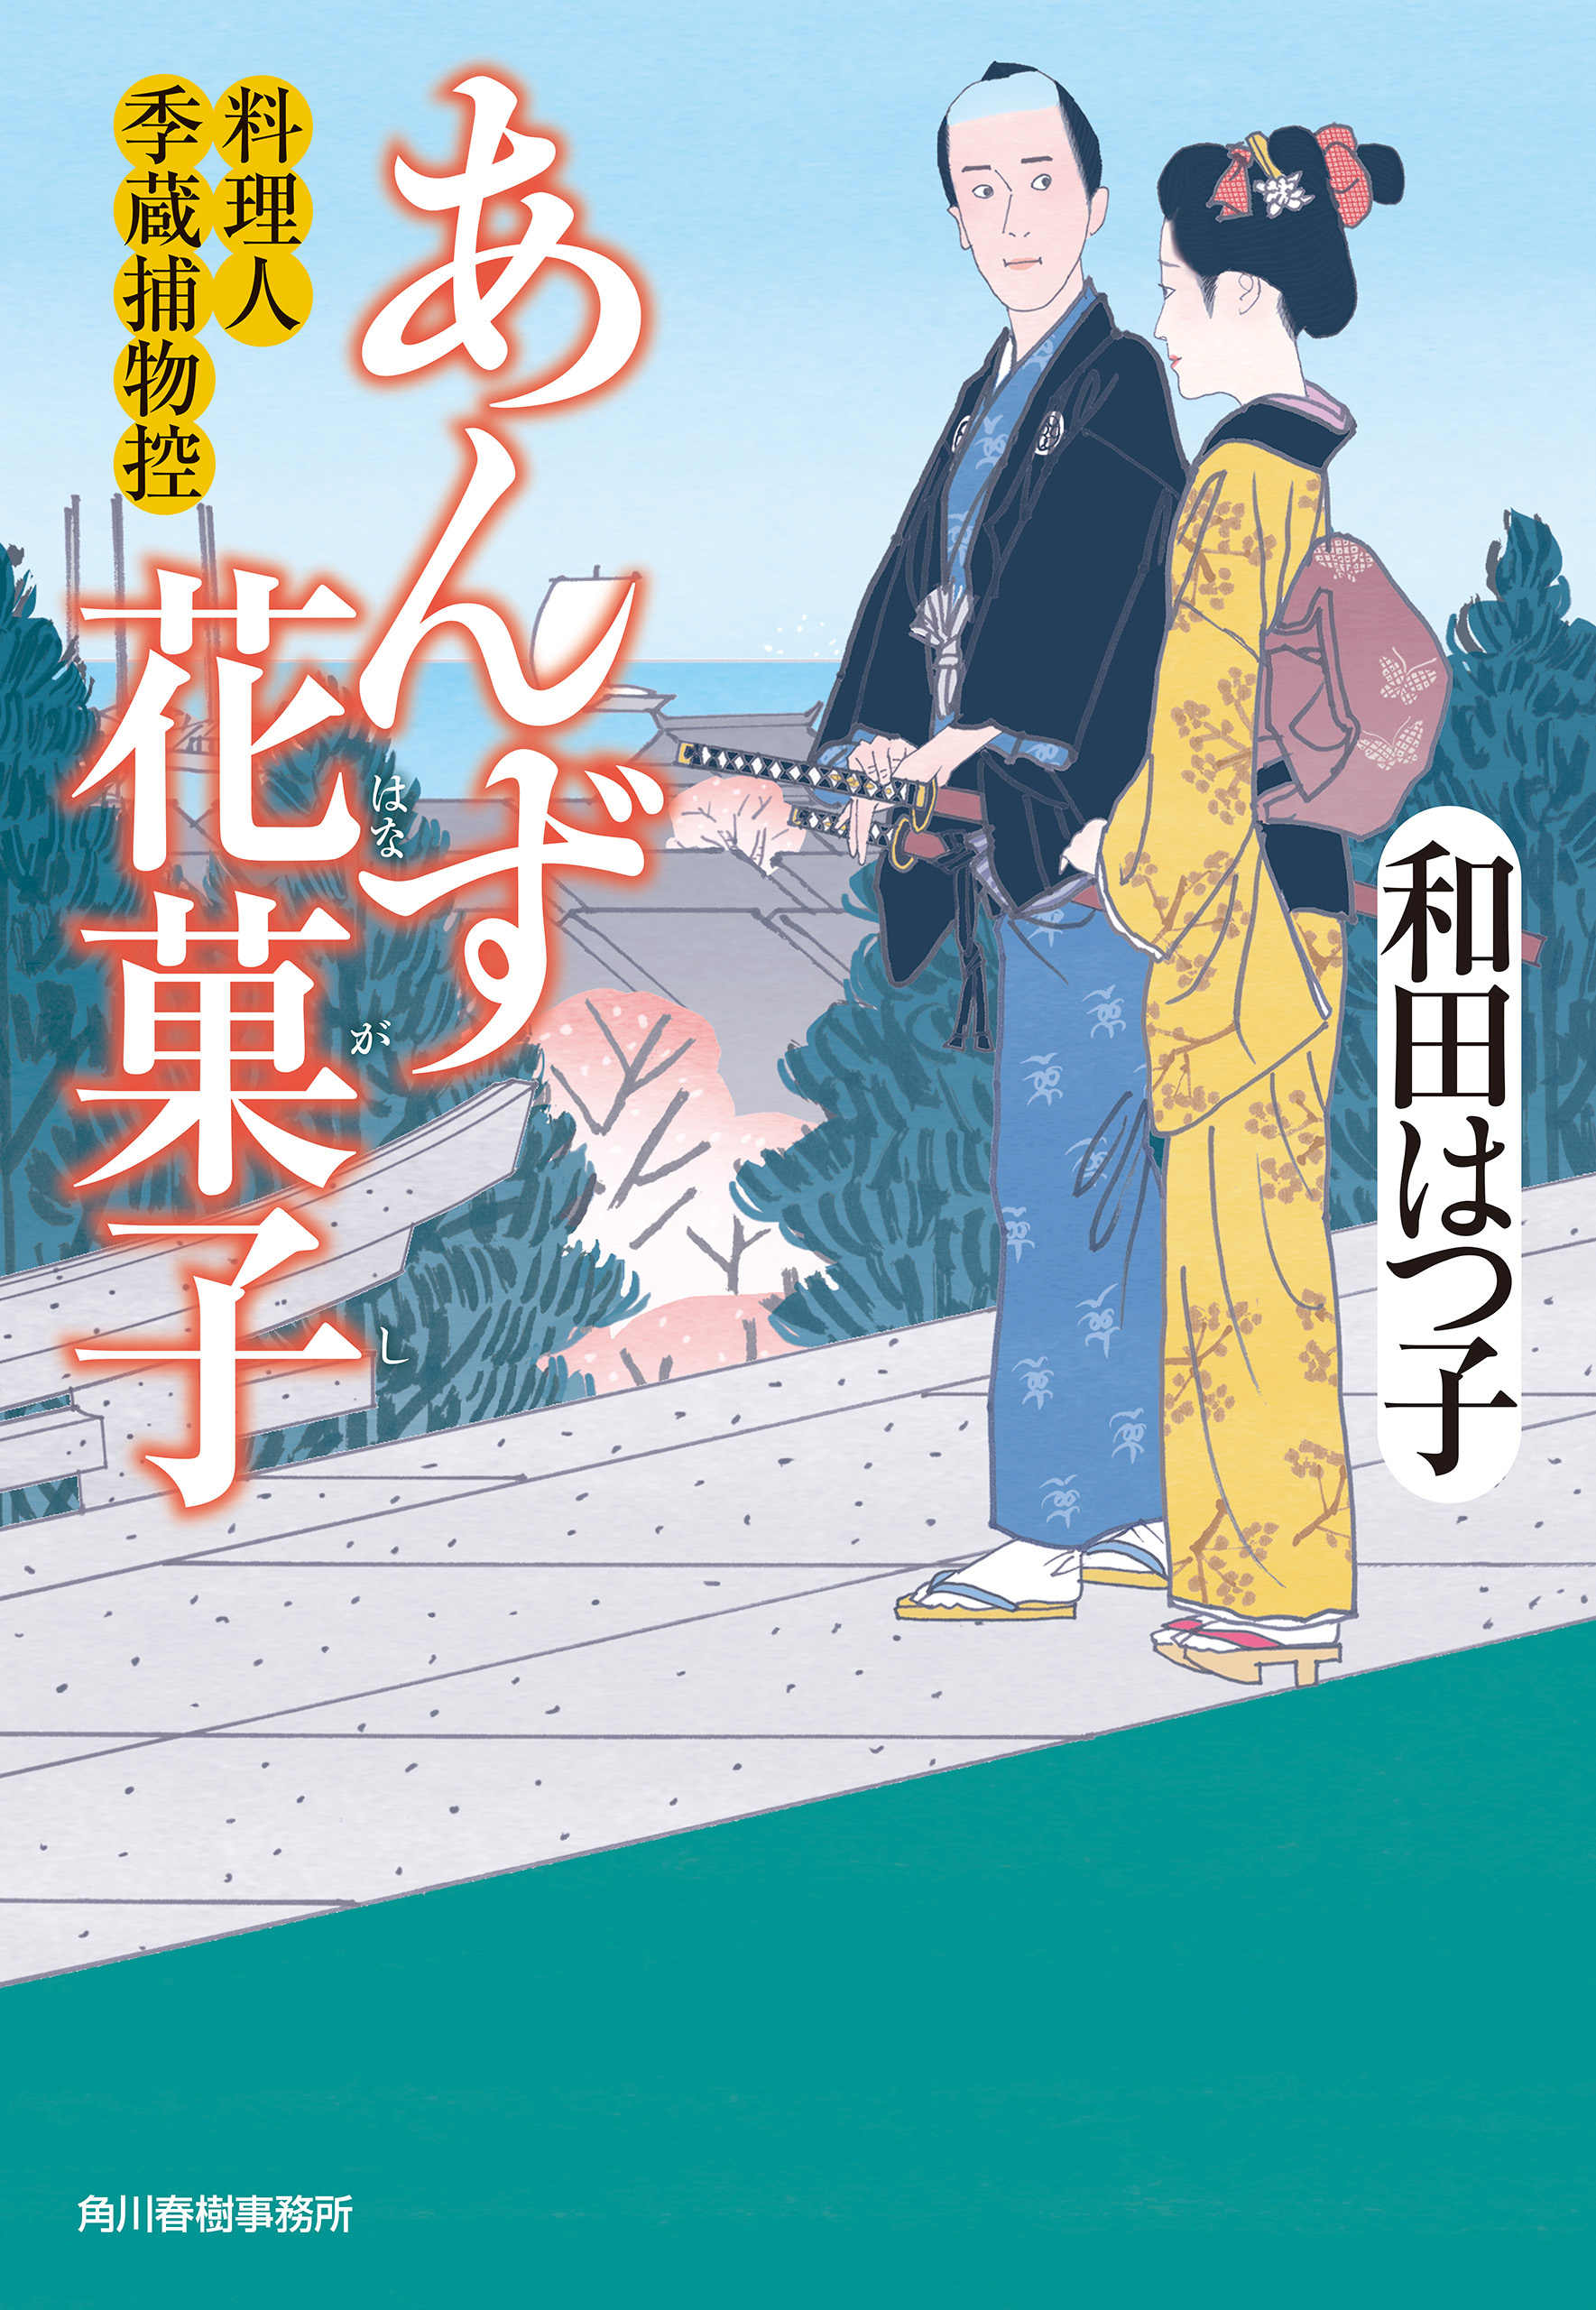 料理人季蔵捕物控(3ページ目)全巻(1-46巻 最新刊)|和田はつ子|人気漫画 